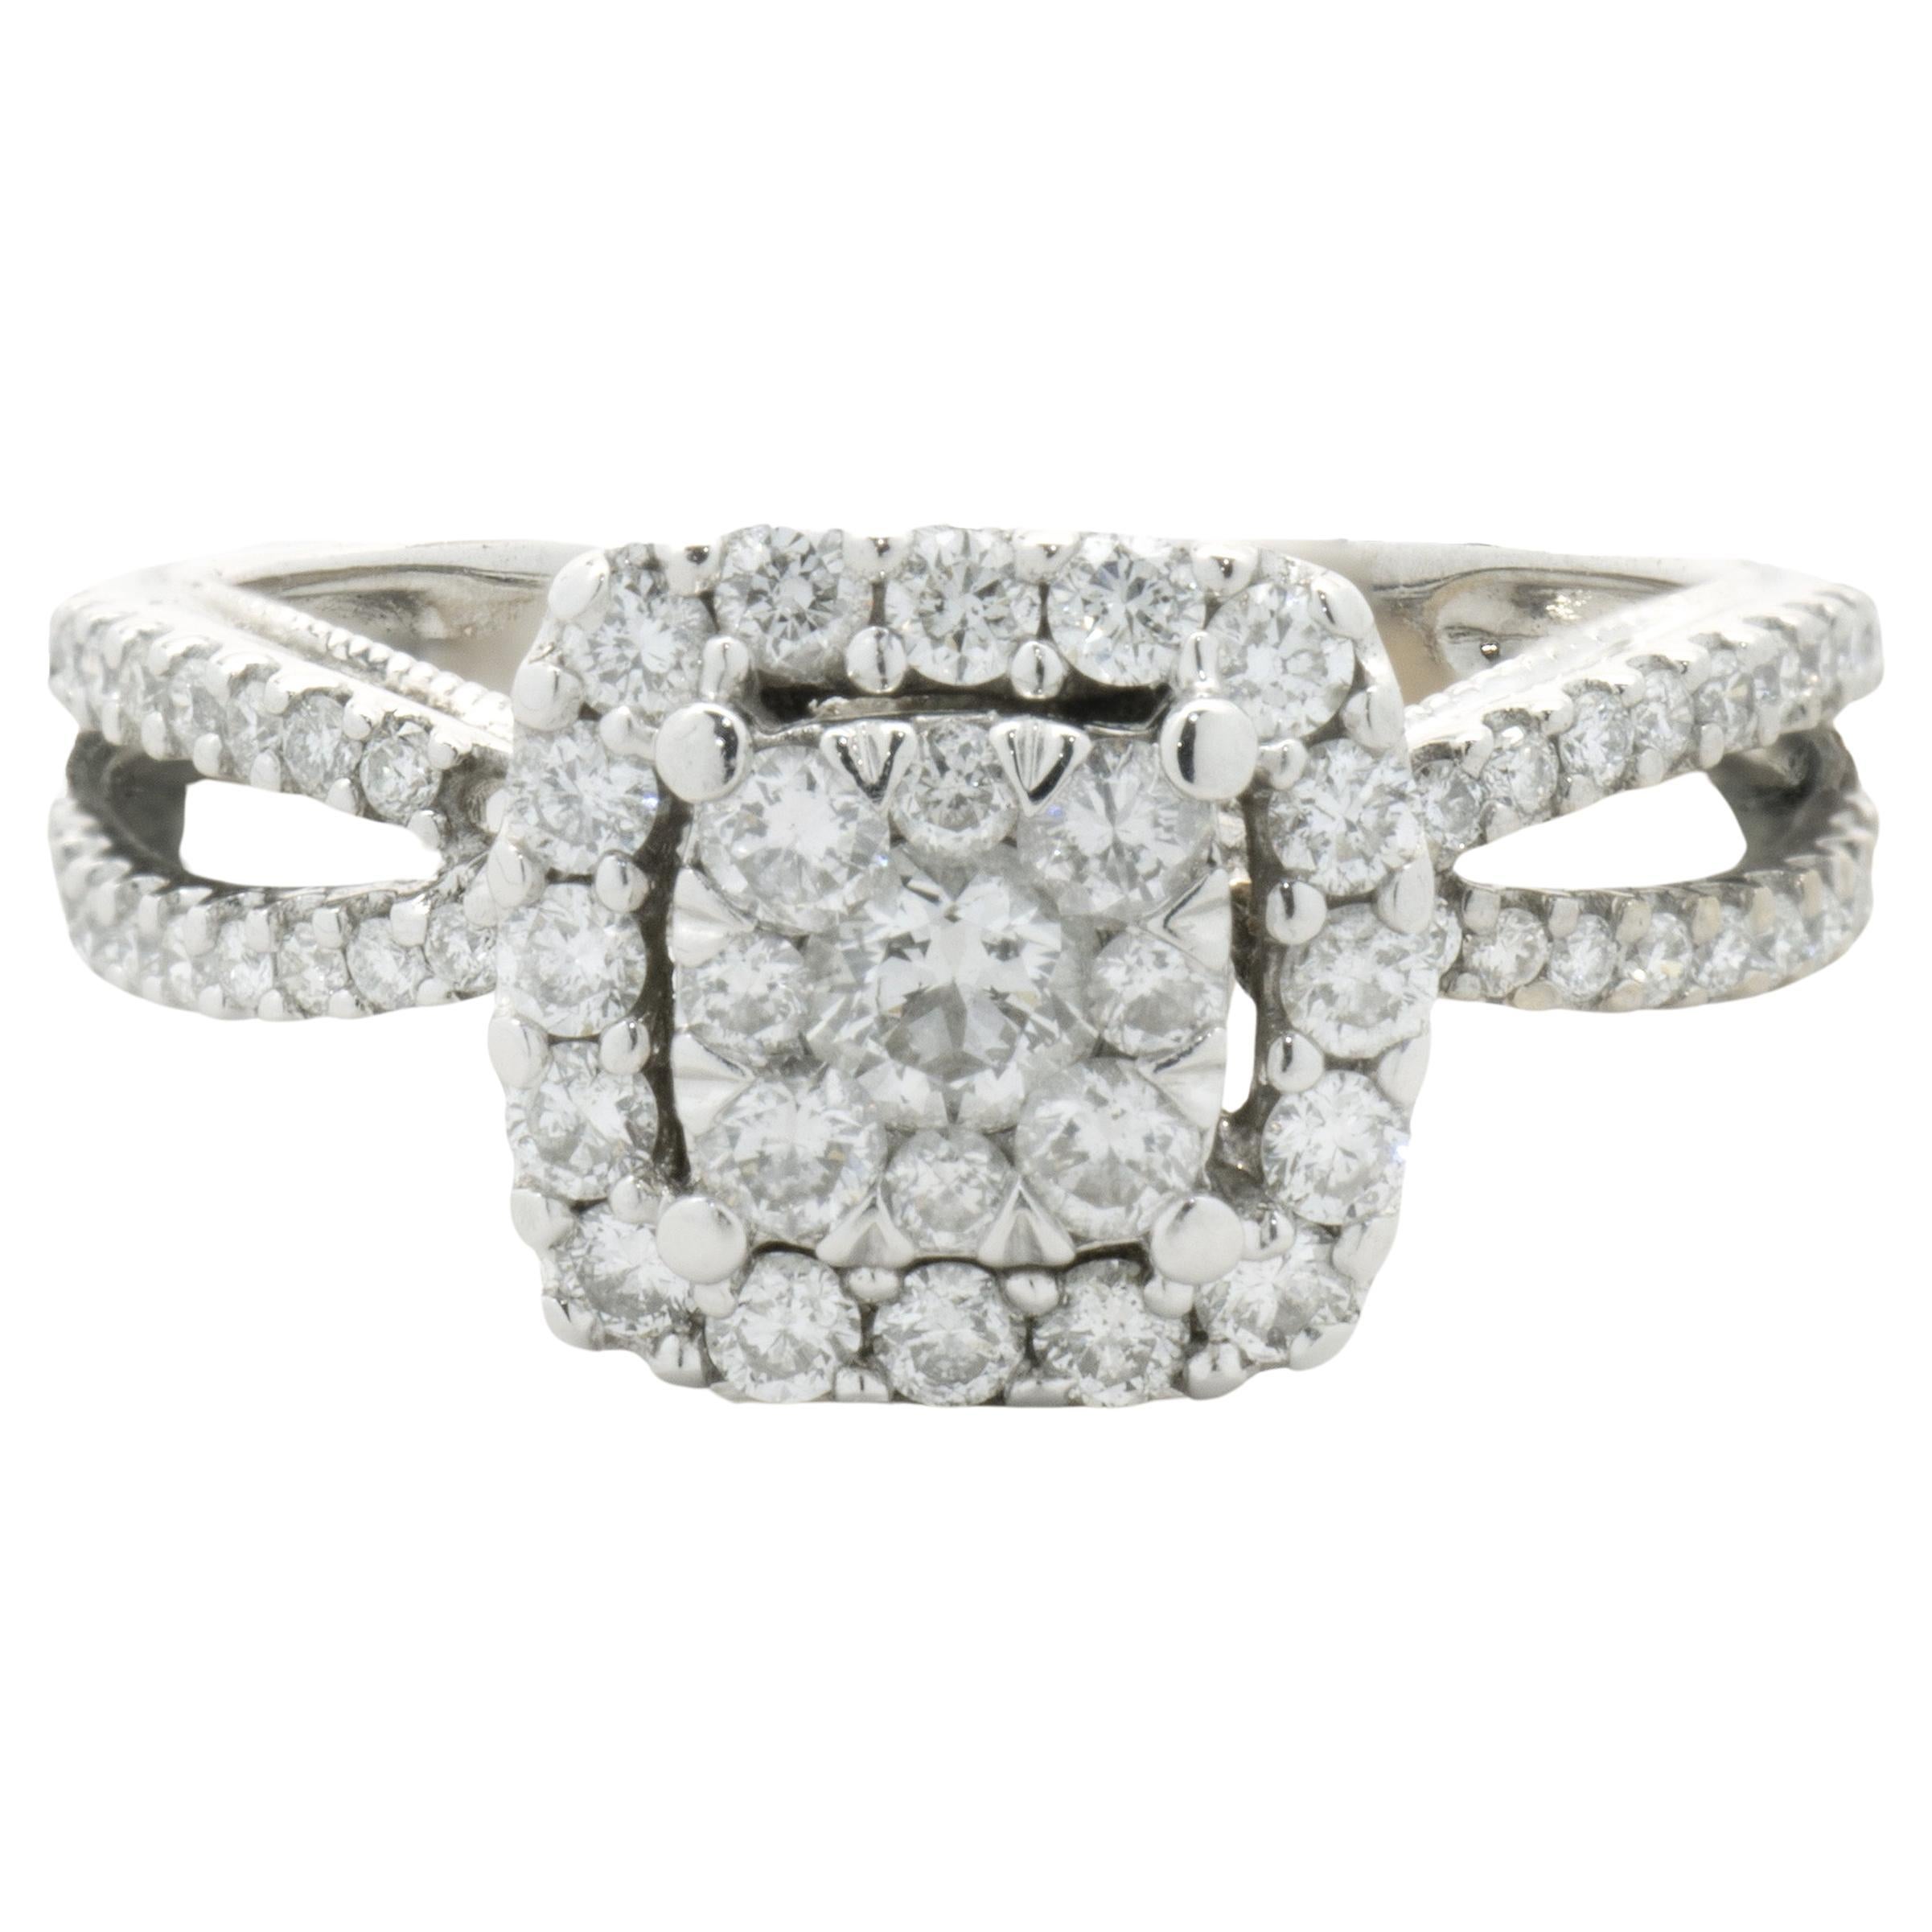 14 Karat White Gold Diamond Cluster Engagement Ring